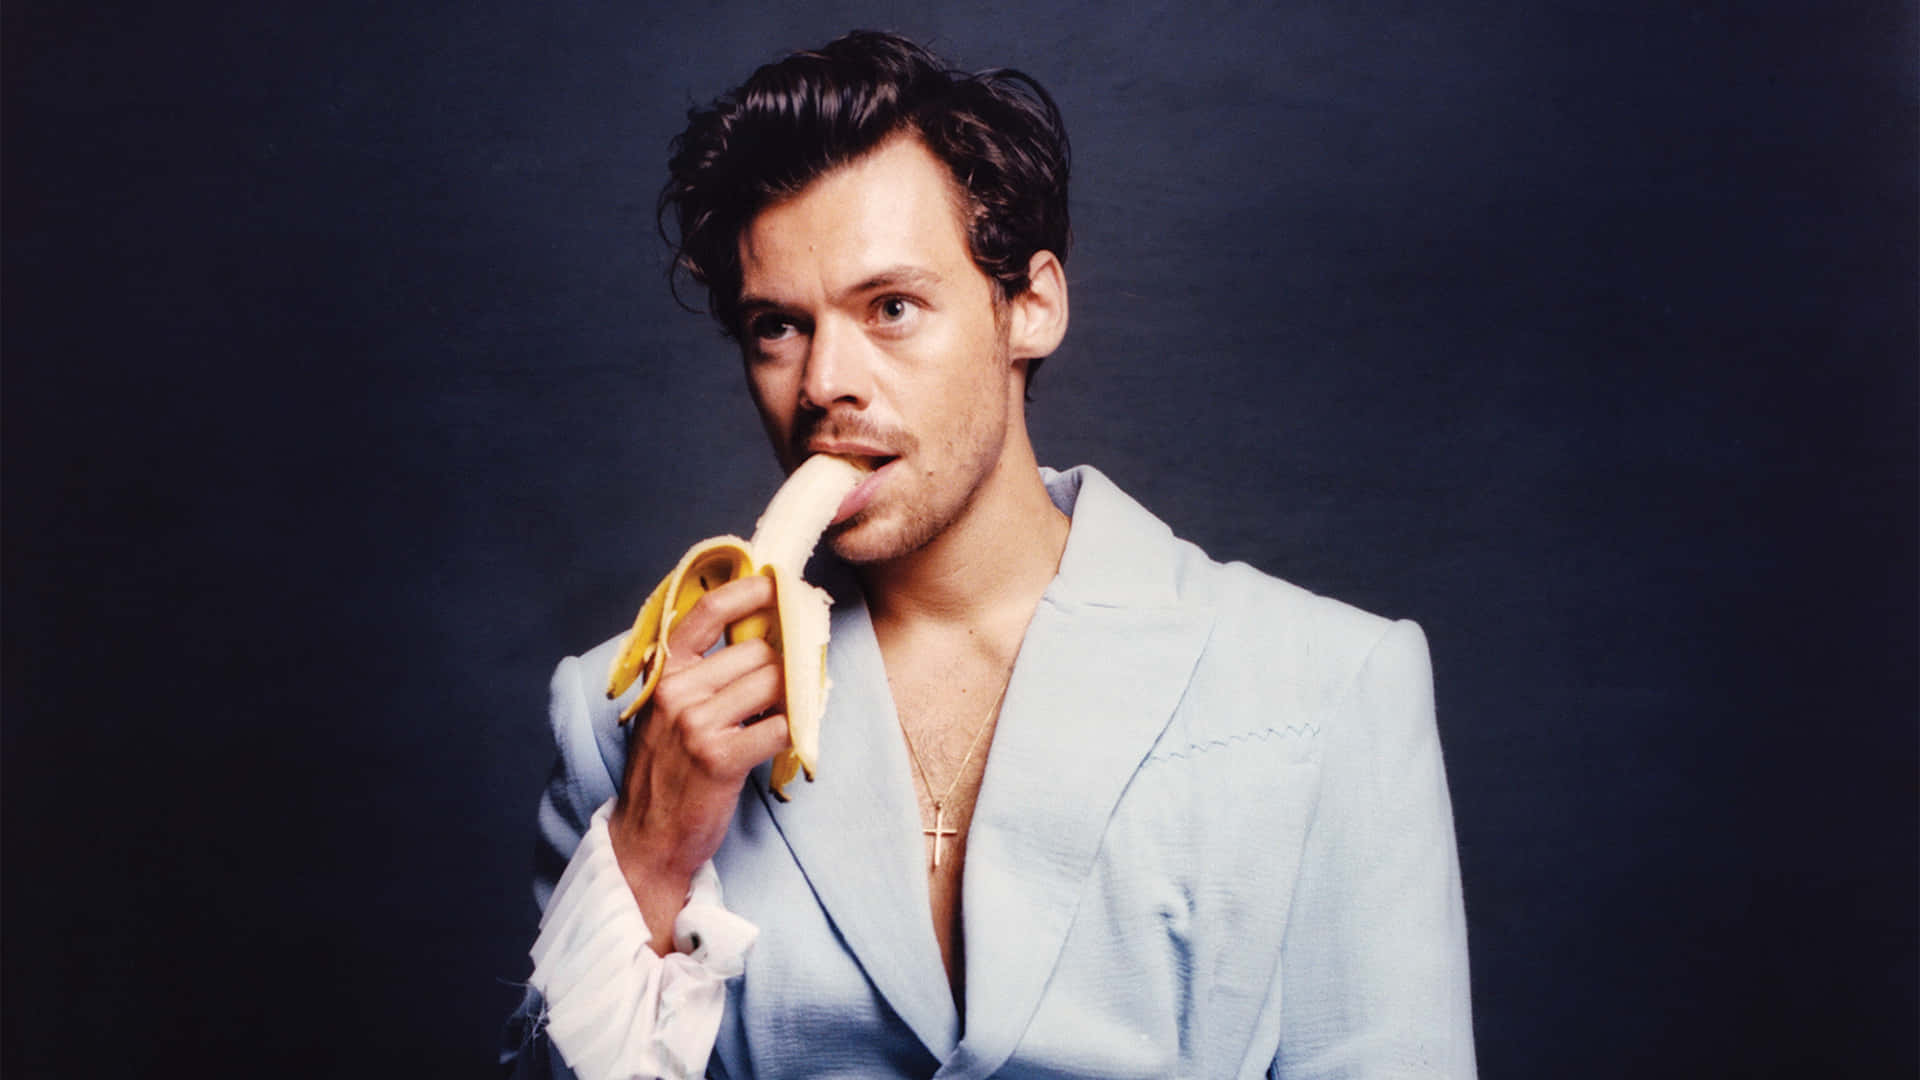 Suave Harry Styles Eating Banana [wallpaper] Wallpaper